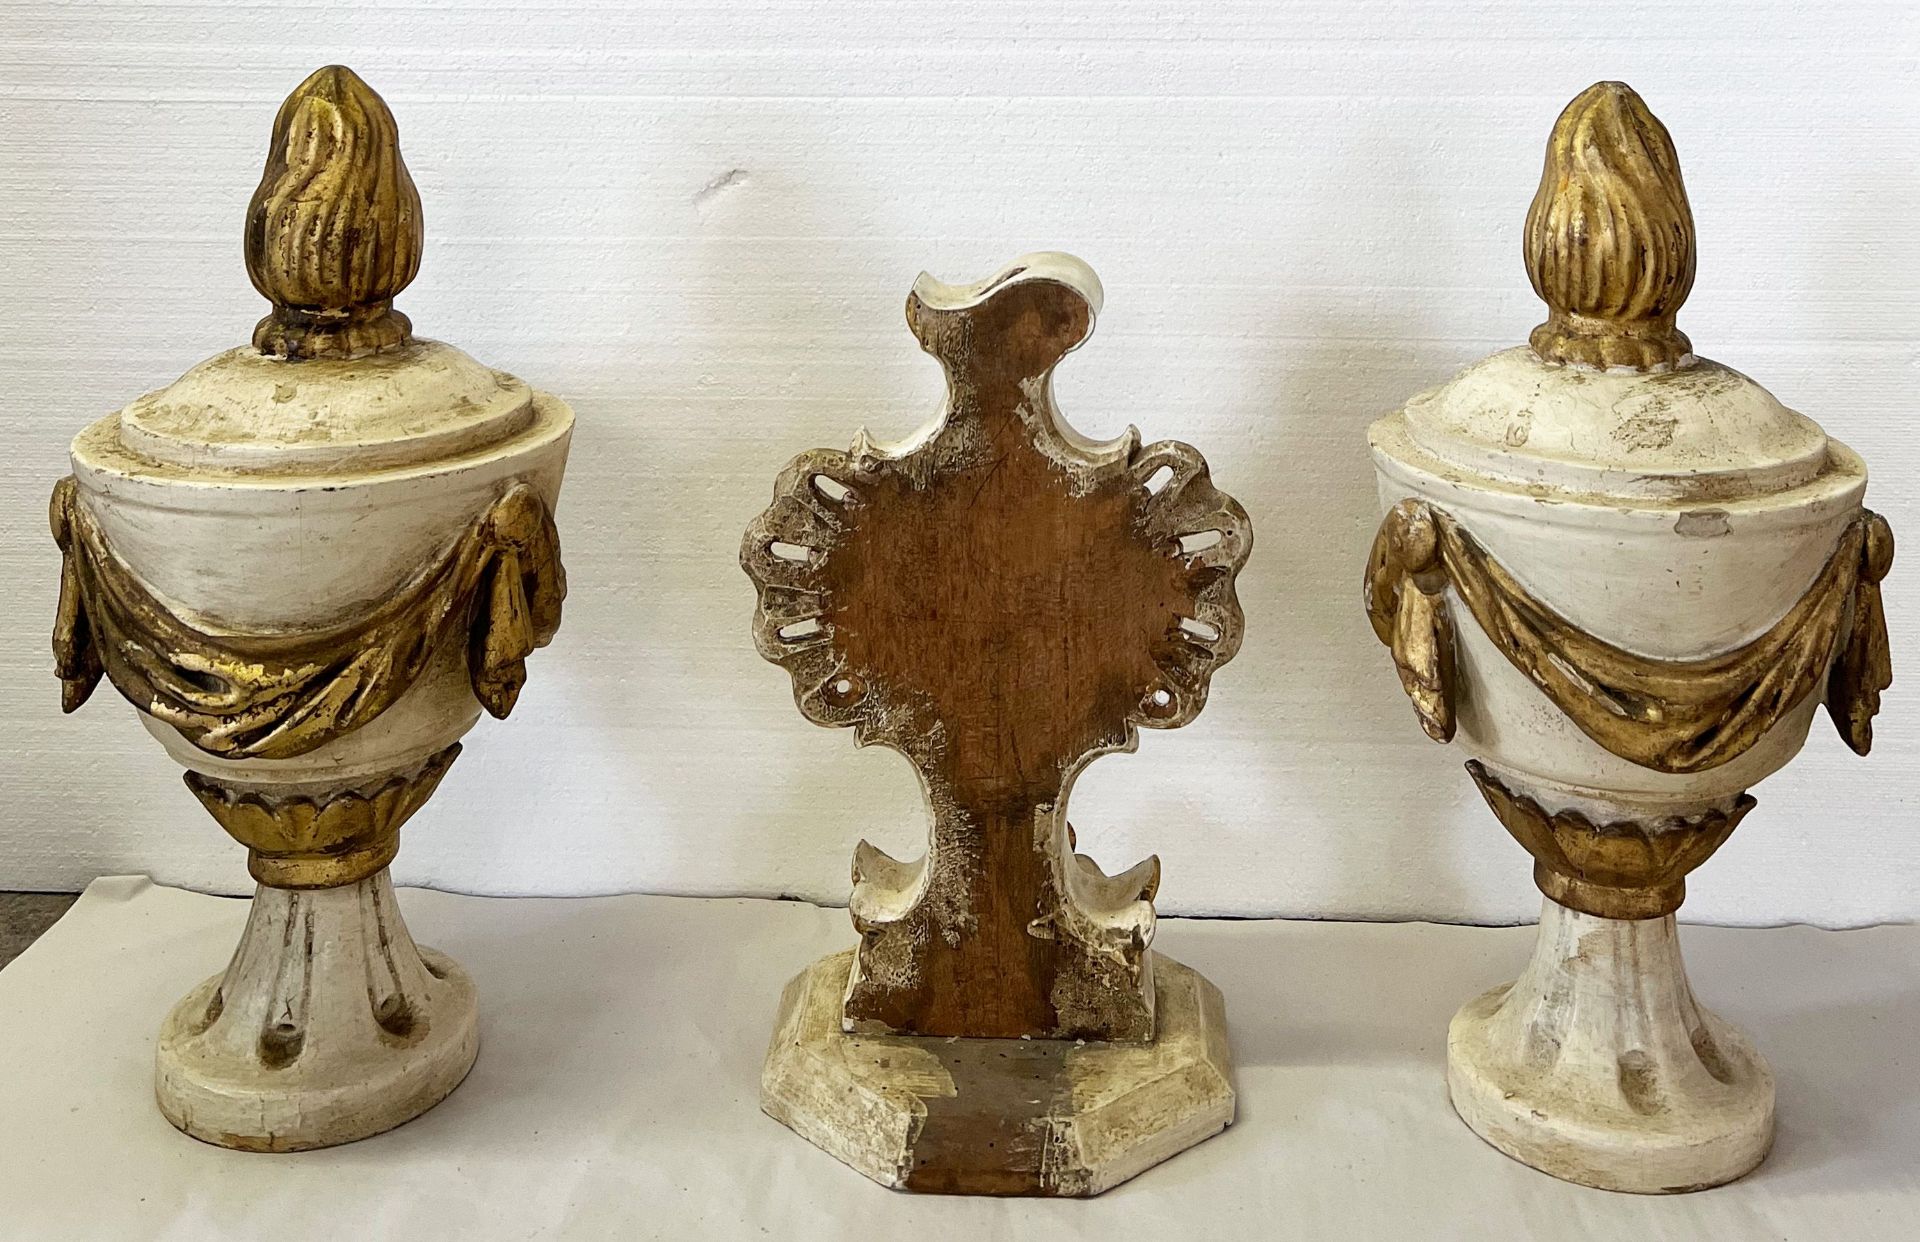 3 Altarvasen/ altar vases. Franken, barock und später, klassizistisch. 18. Jh./19. Jh., Holz, farbig - Image 2 of 3